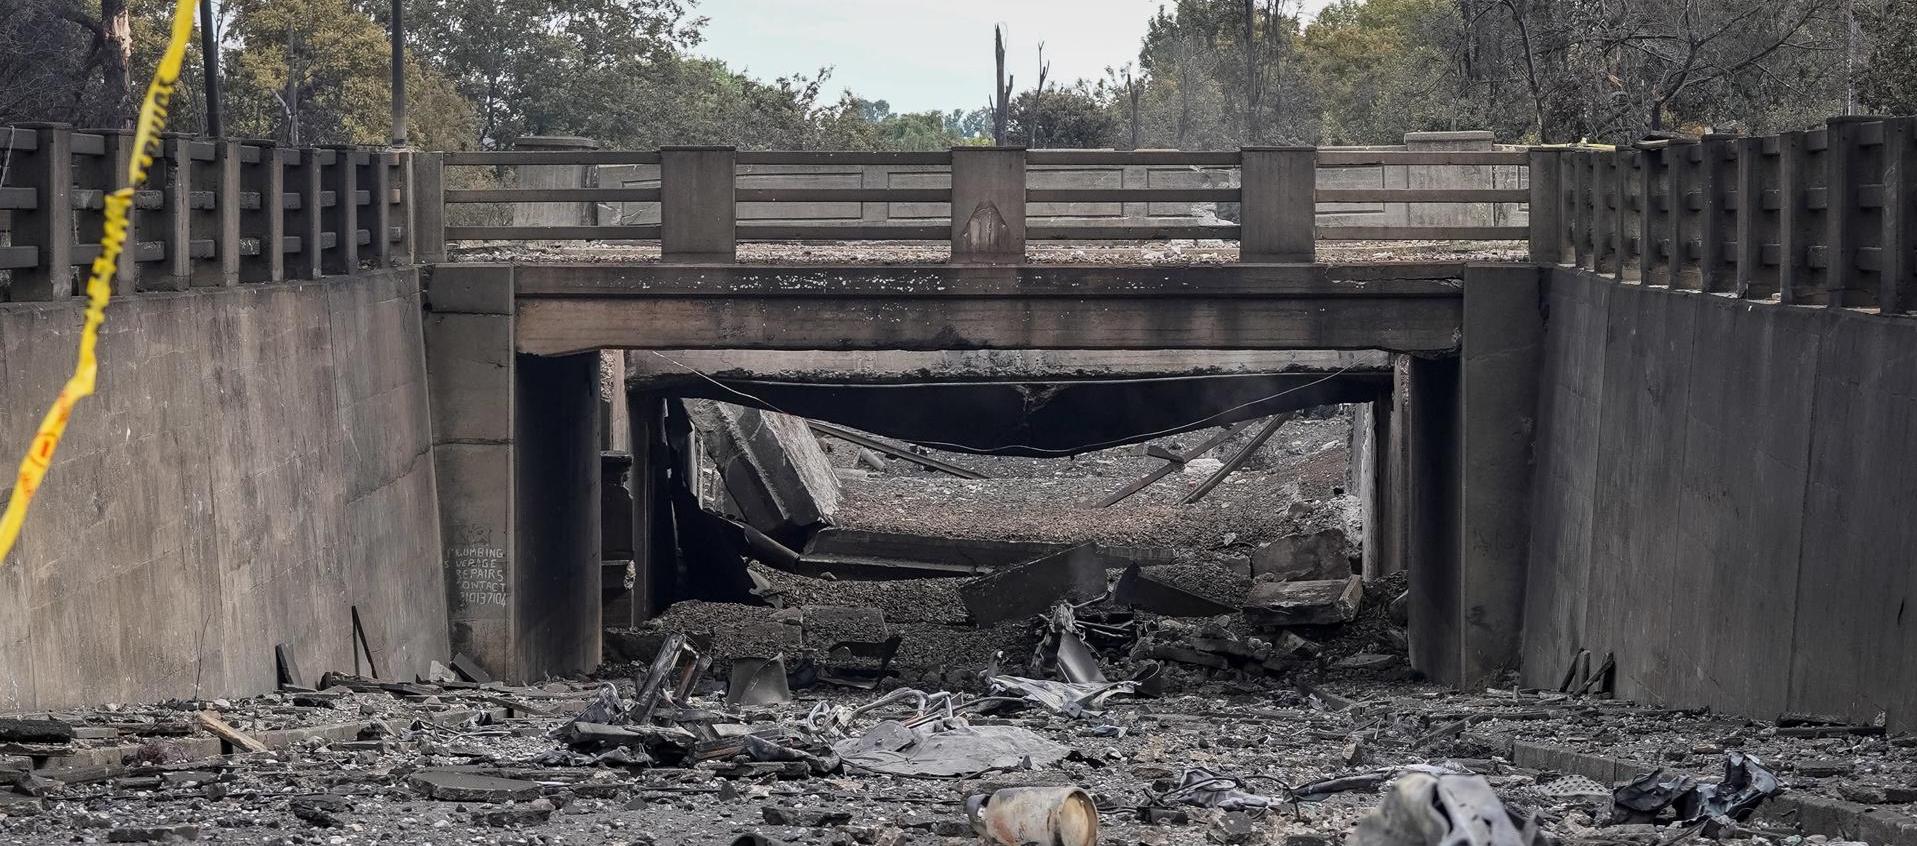 En este puente de Johannesburgo se registró la tragedia.